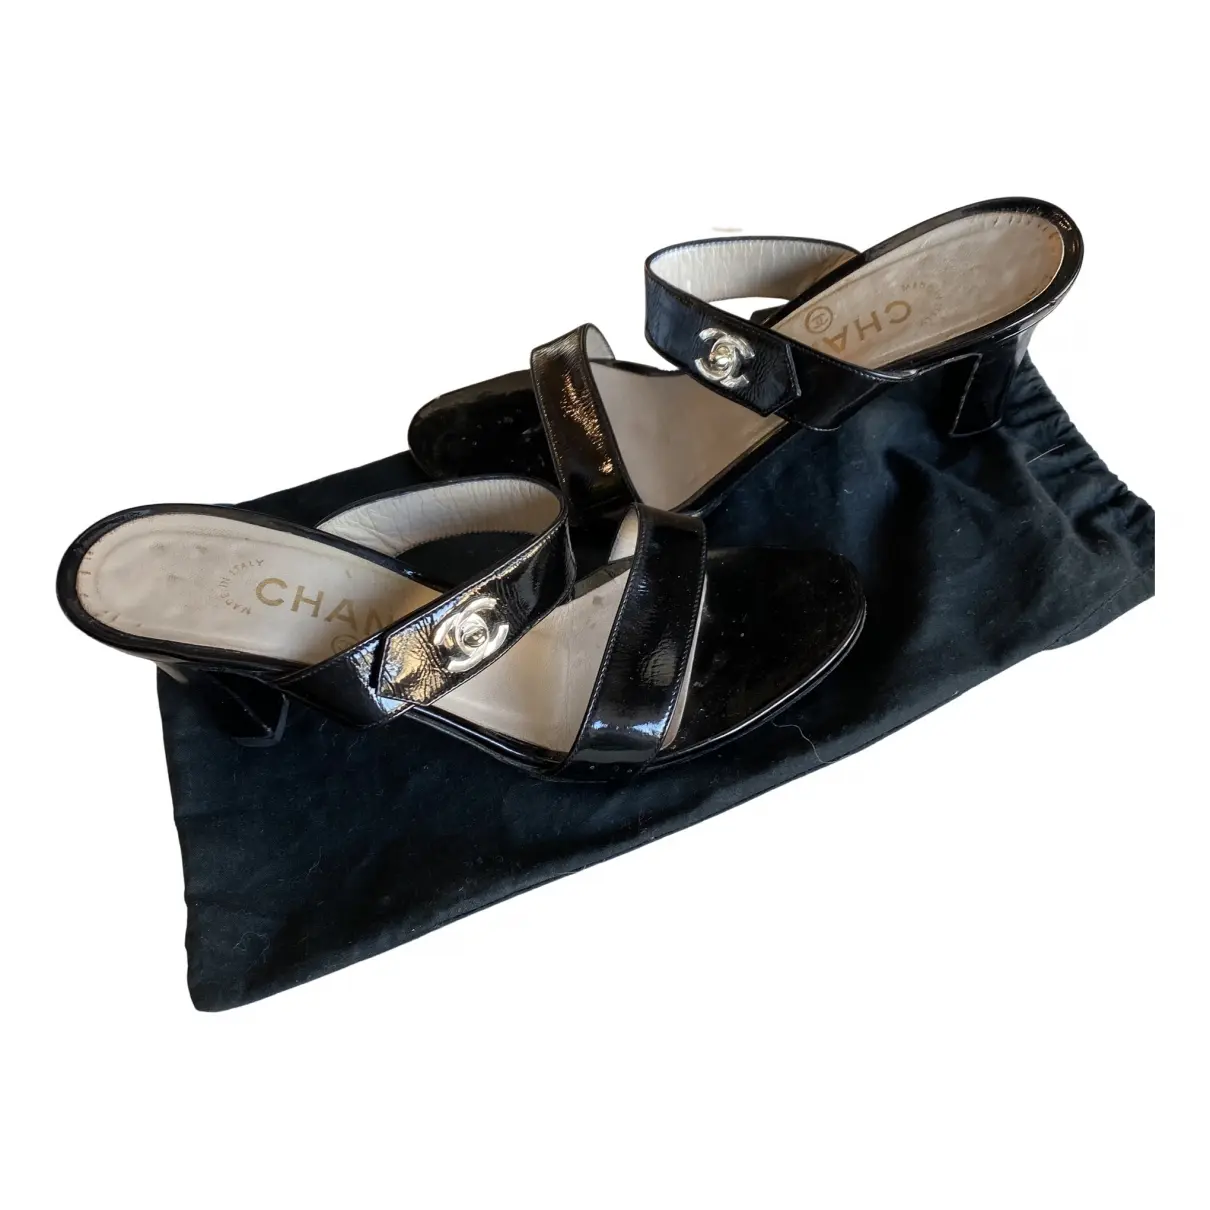 Patent leather sandals Chanel - Vintage